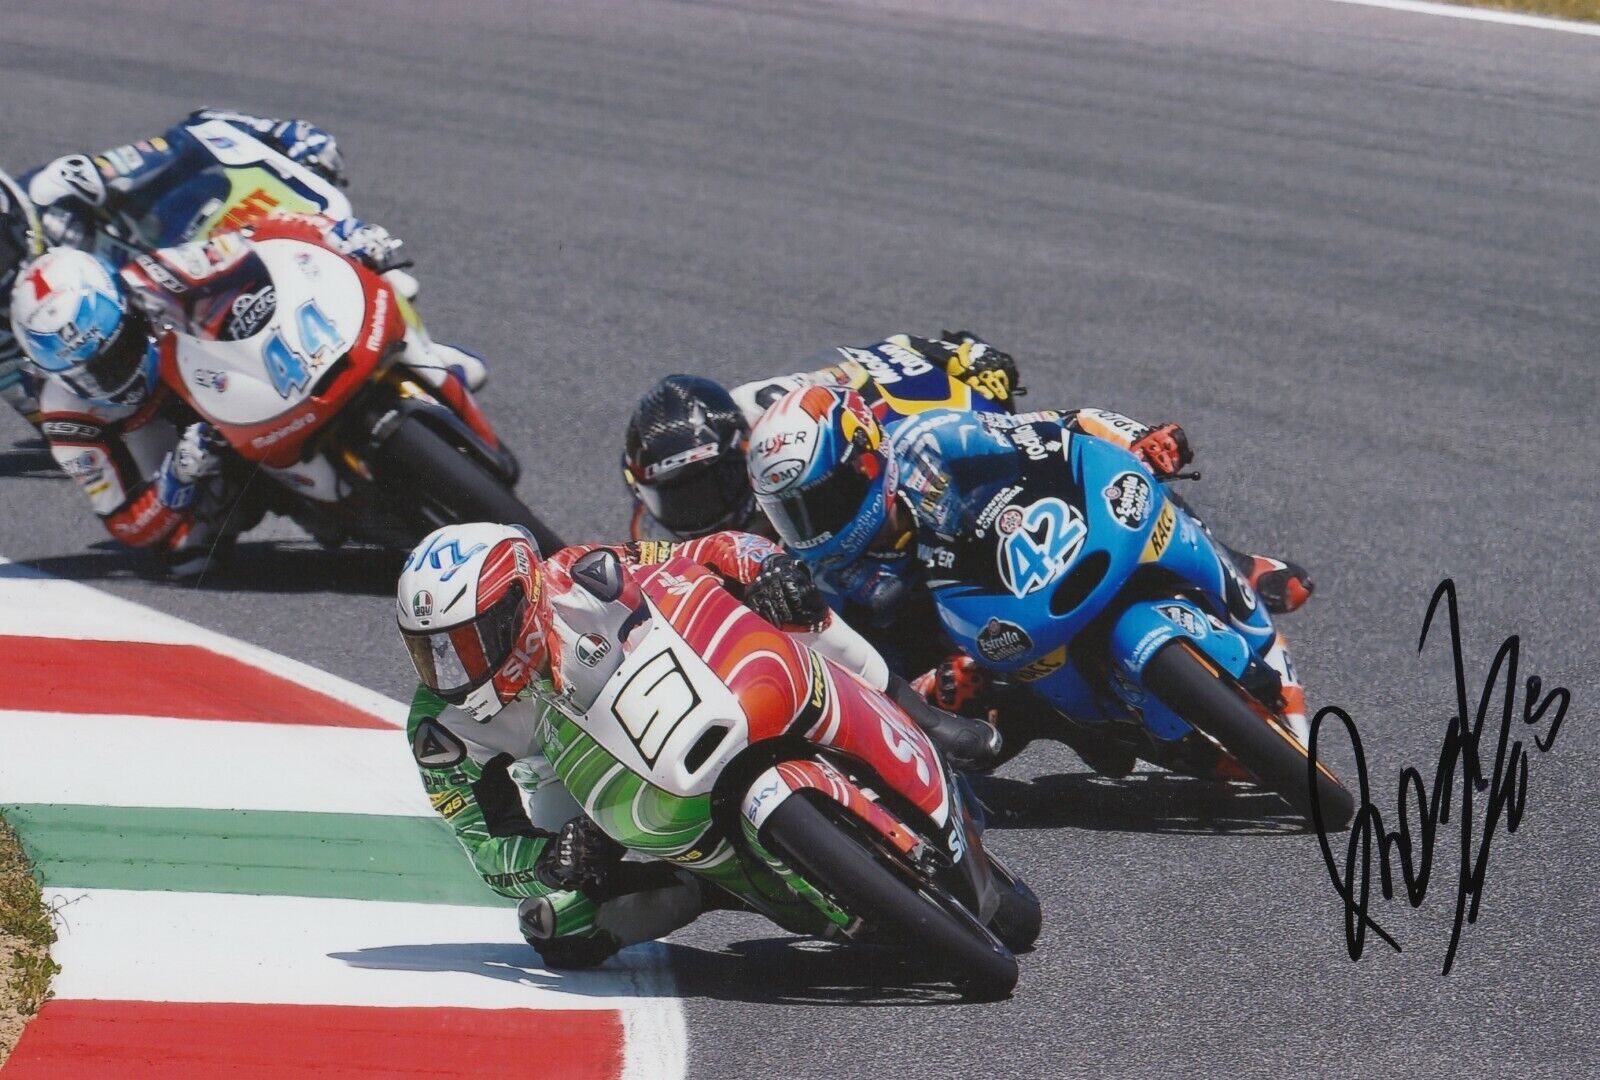 Romano Fenati Hand Signed 12x8 Photo Poster painting - MotoGP Autograph 12.